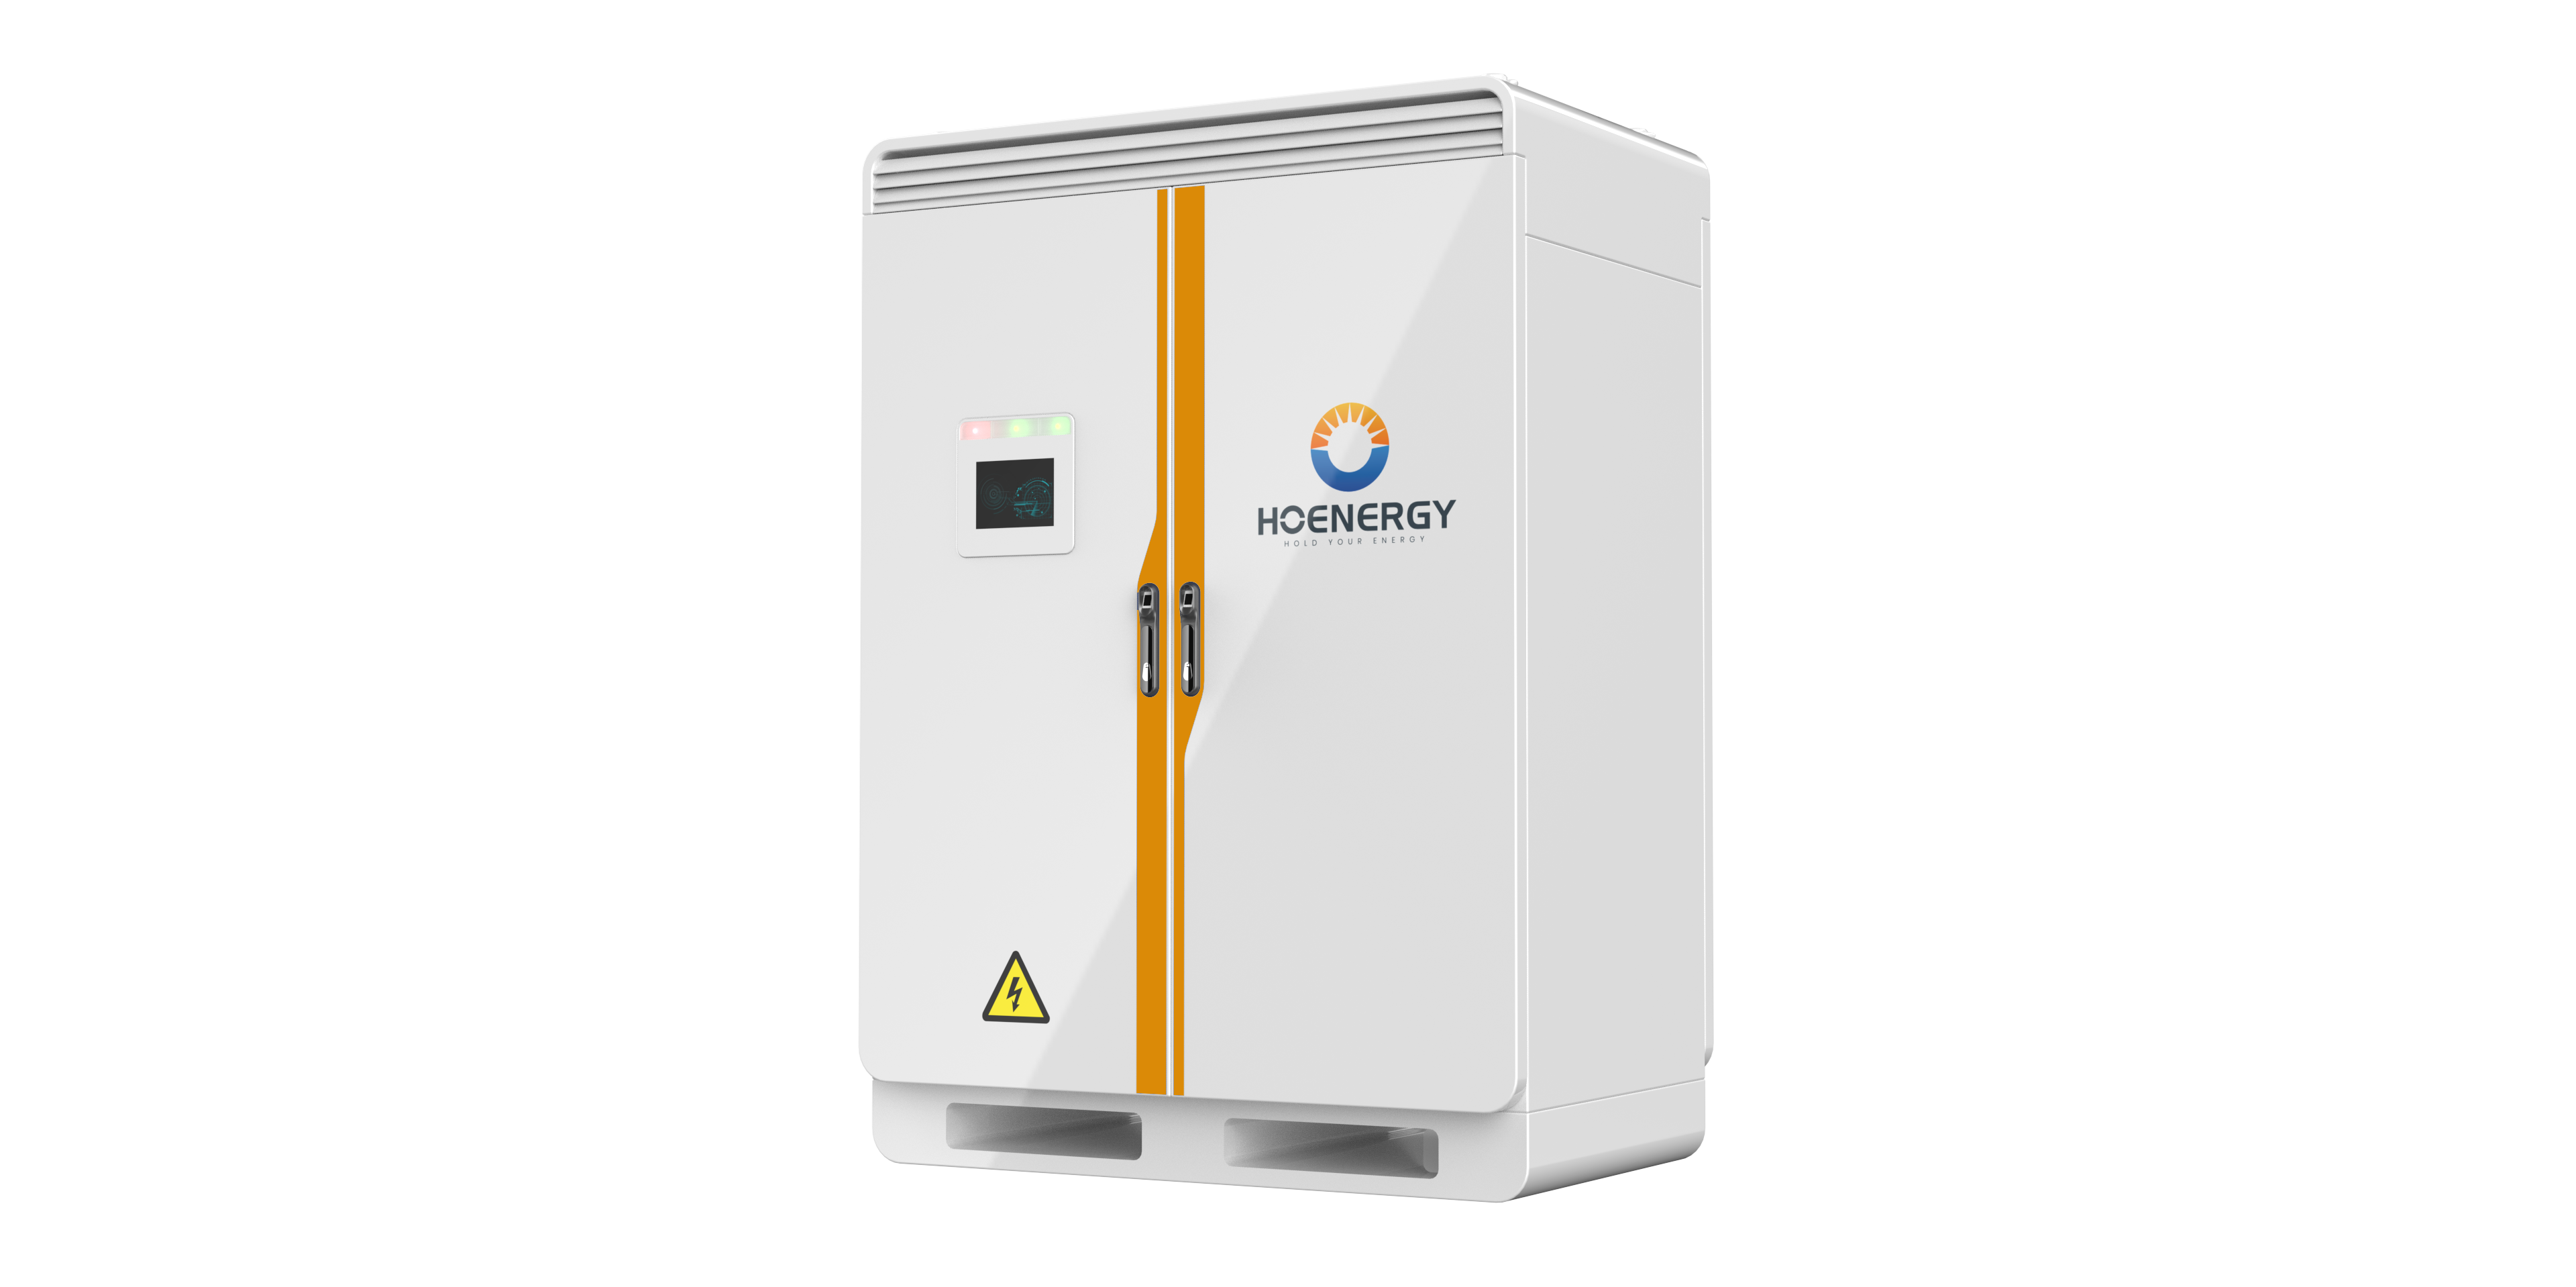 solar battery energy storage